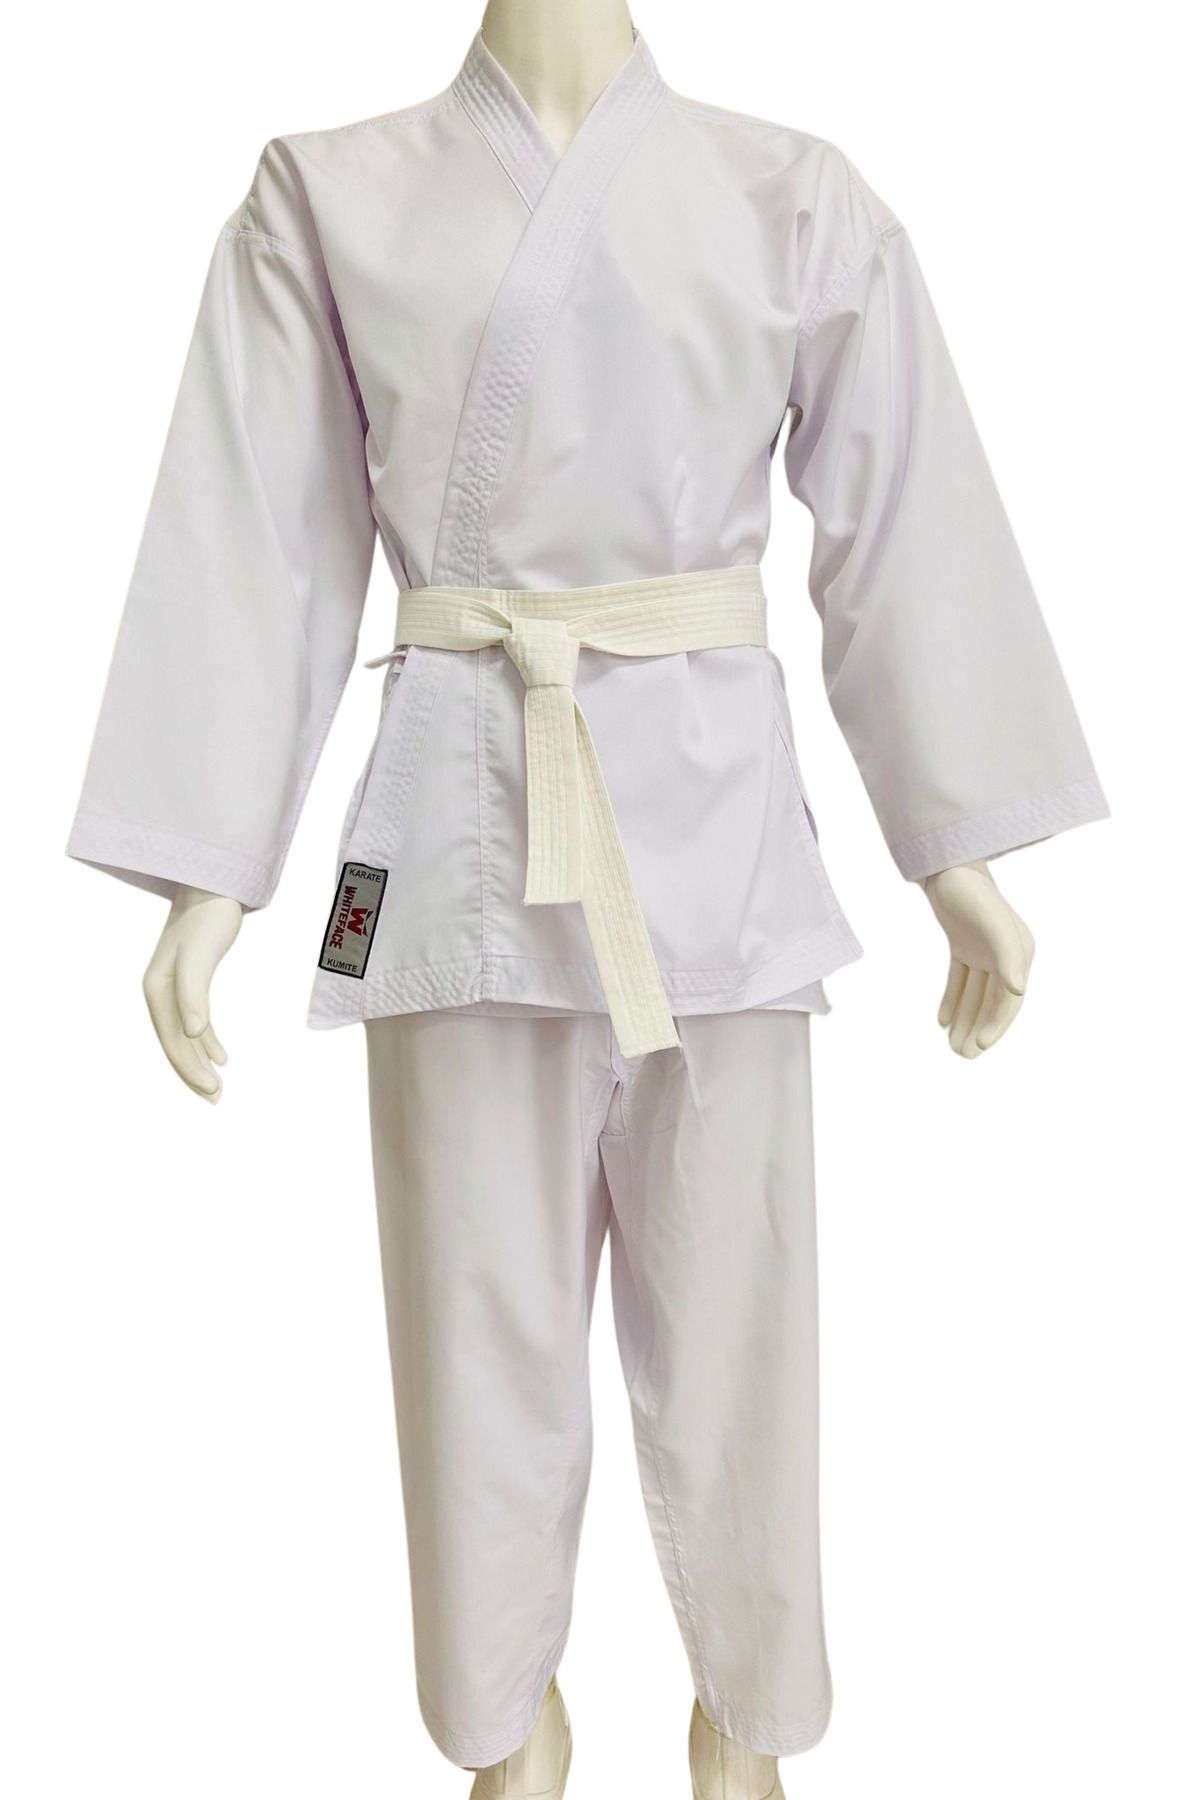 whiteface Karate Kumite Elbisesi (BEYAZ KUŞAK HEDİYELİ)